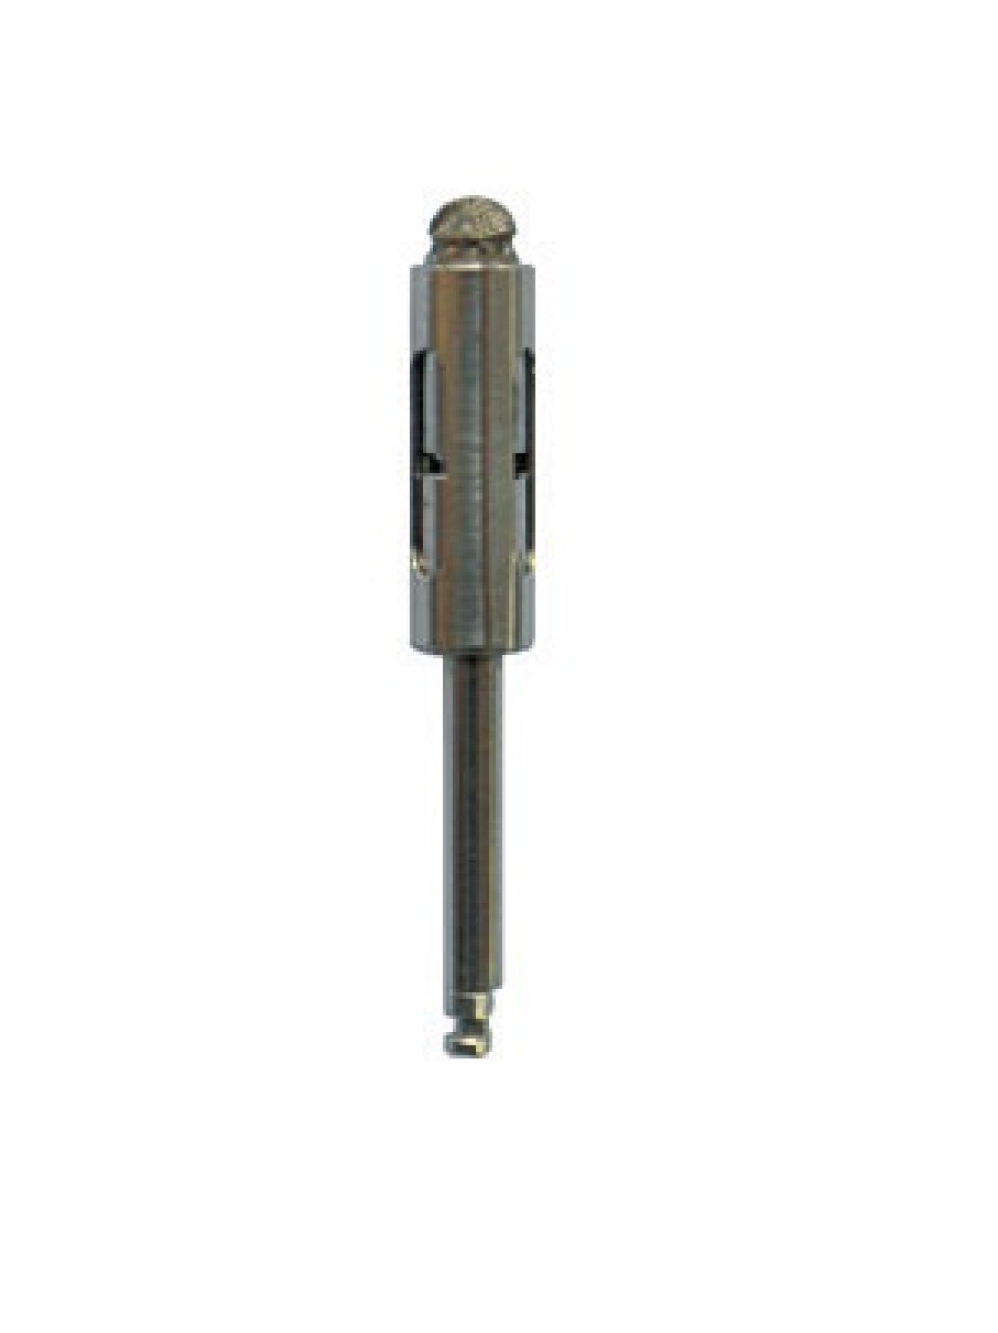 MAS-01-03 Стоматологическая магнитная фреза для синус-лифтинга, диаметр 3.8/4.8 мм, глубина 2 мм, Mr.Curette Tech, Южная Корея